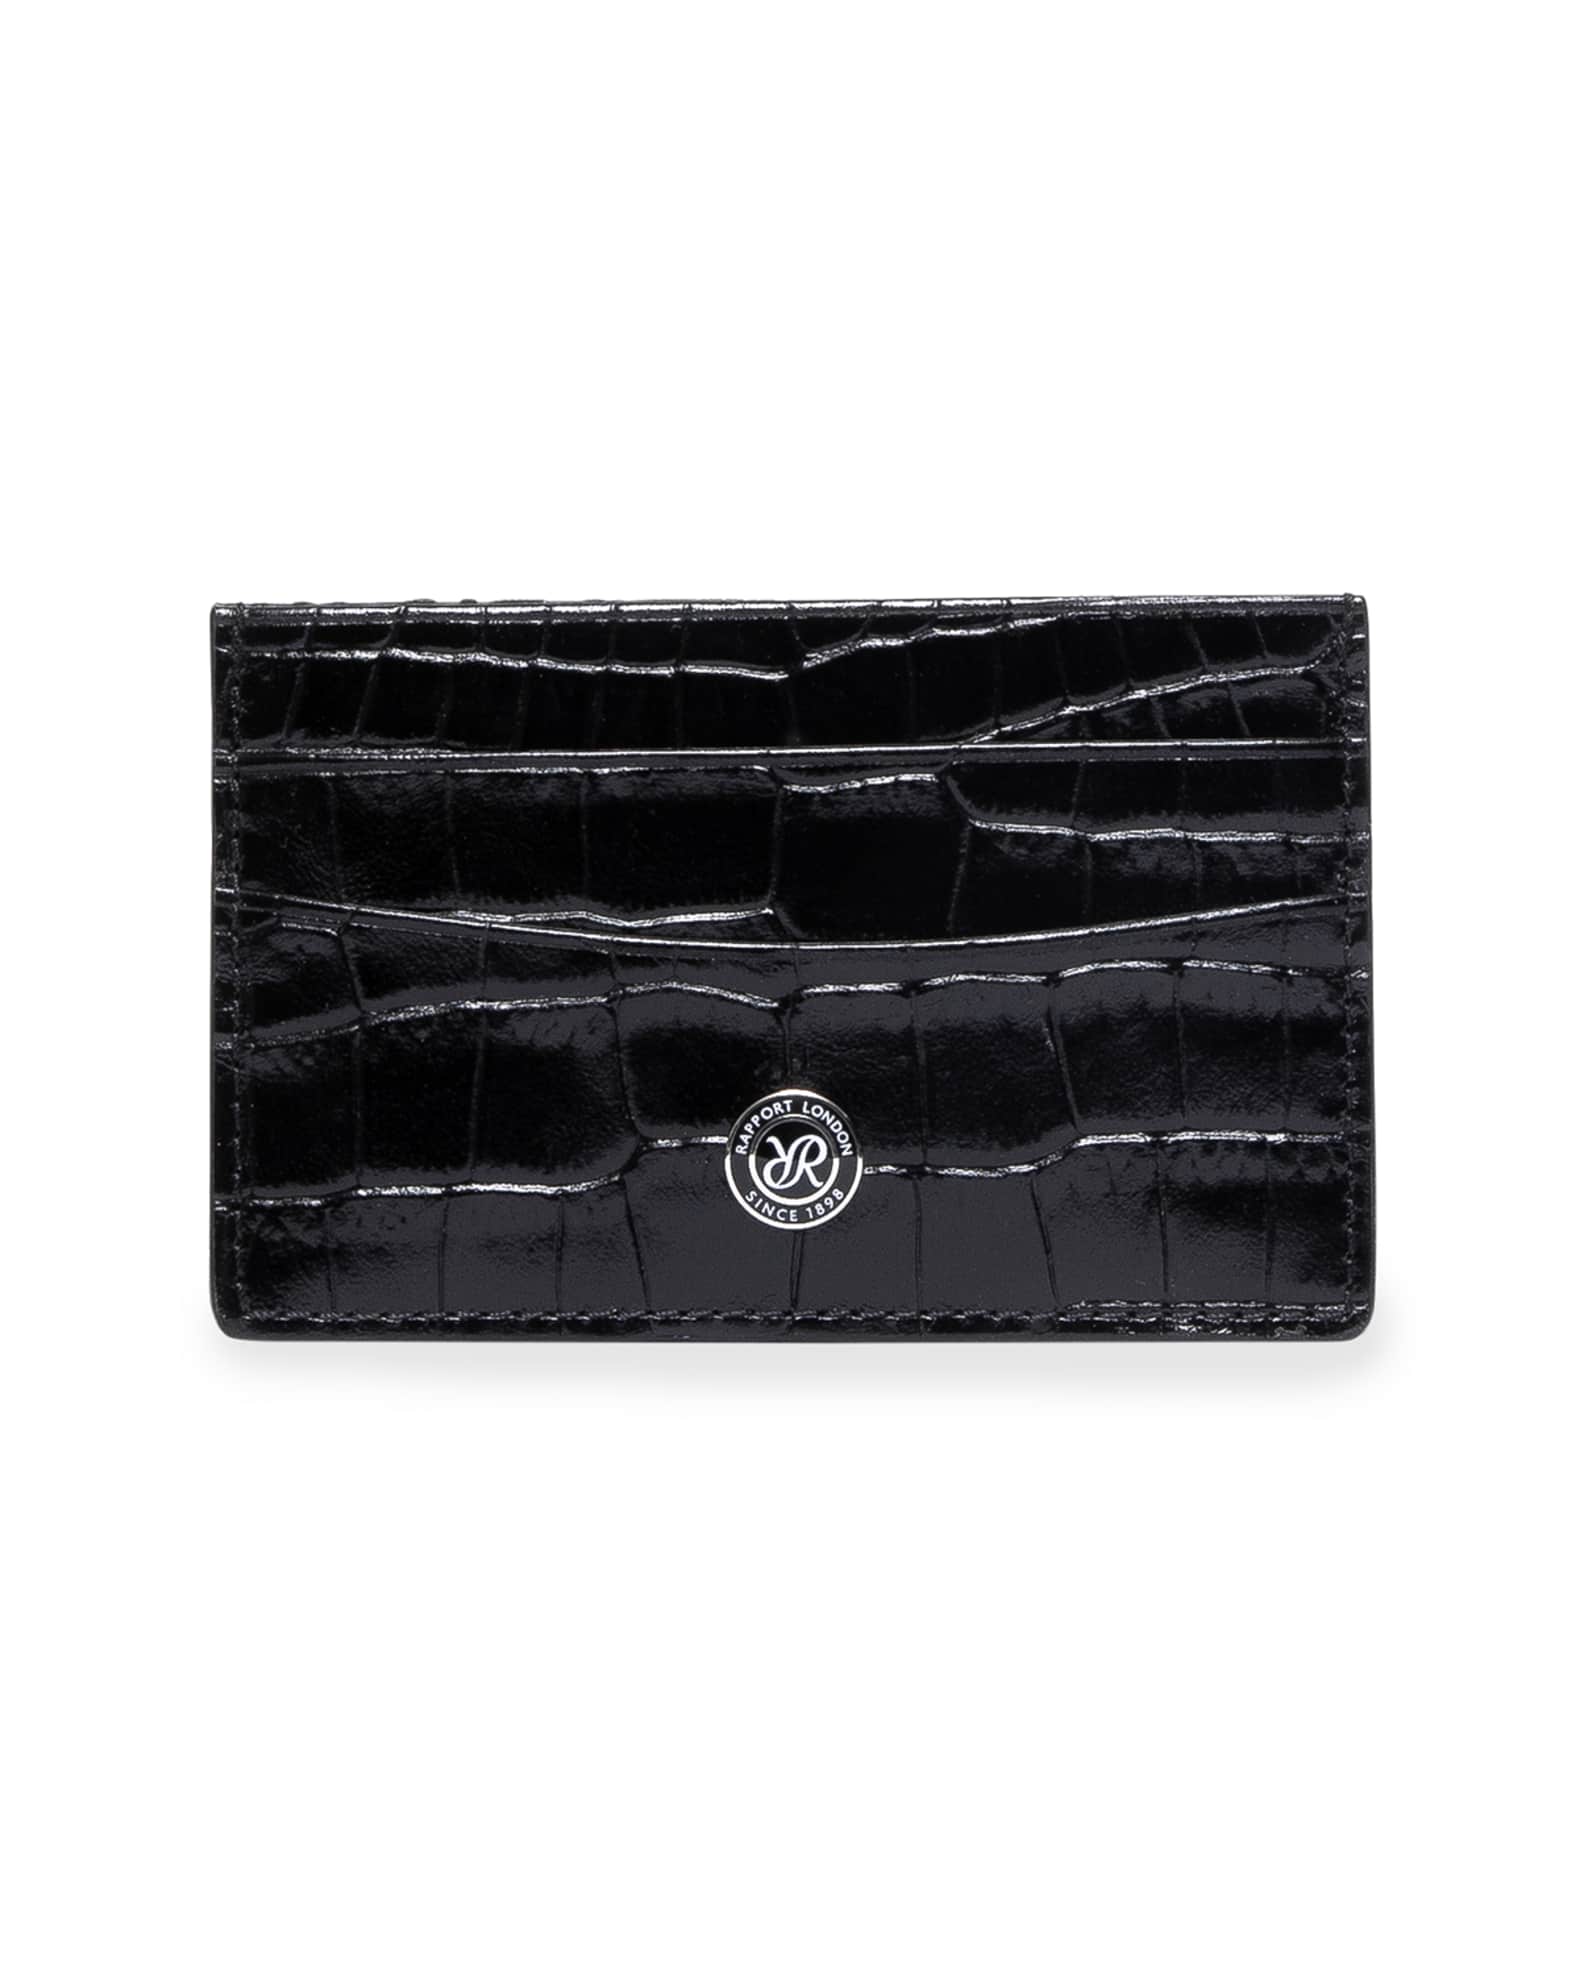 Chanel BLACK Caviar Passport Holder Wallet W/ Velvet Case FREE